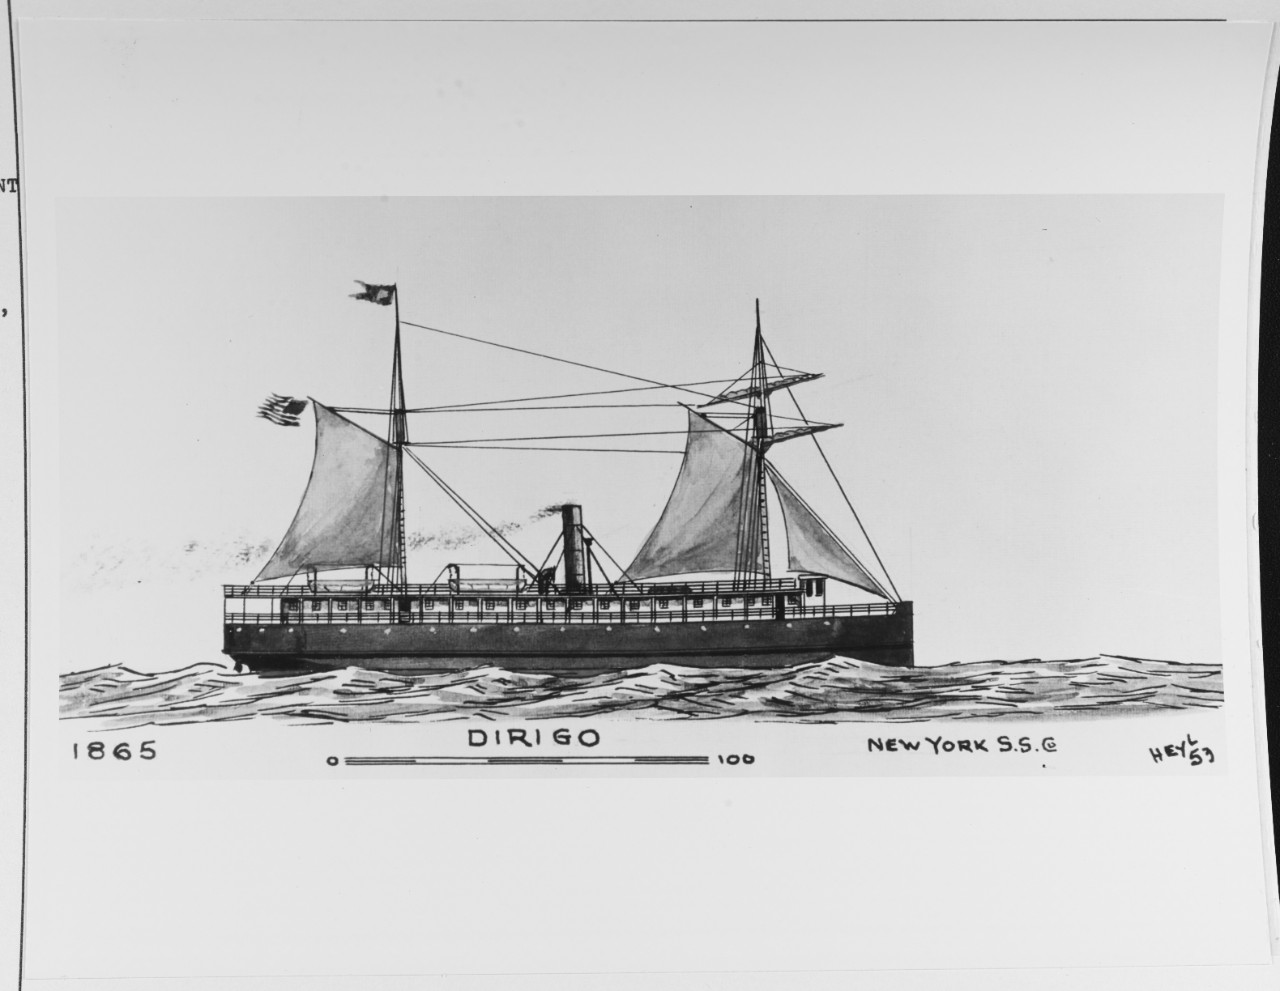 S.S. DIRIGO (American merchant steamer, 1865-1875)